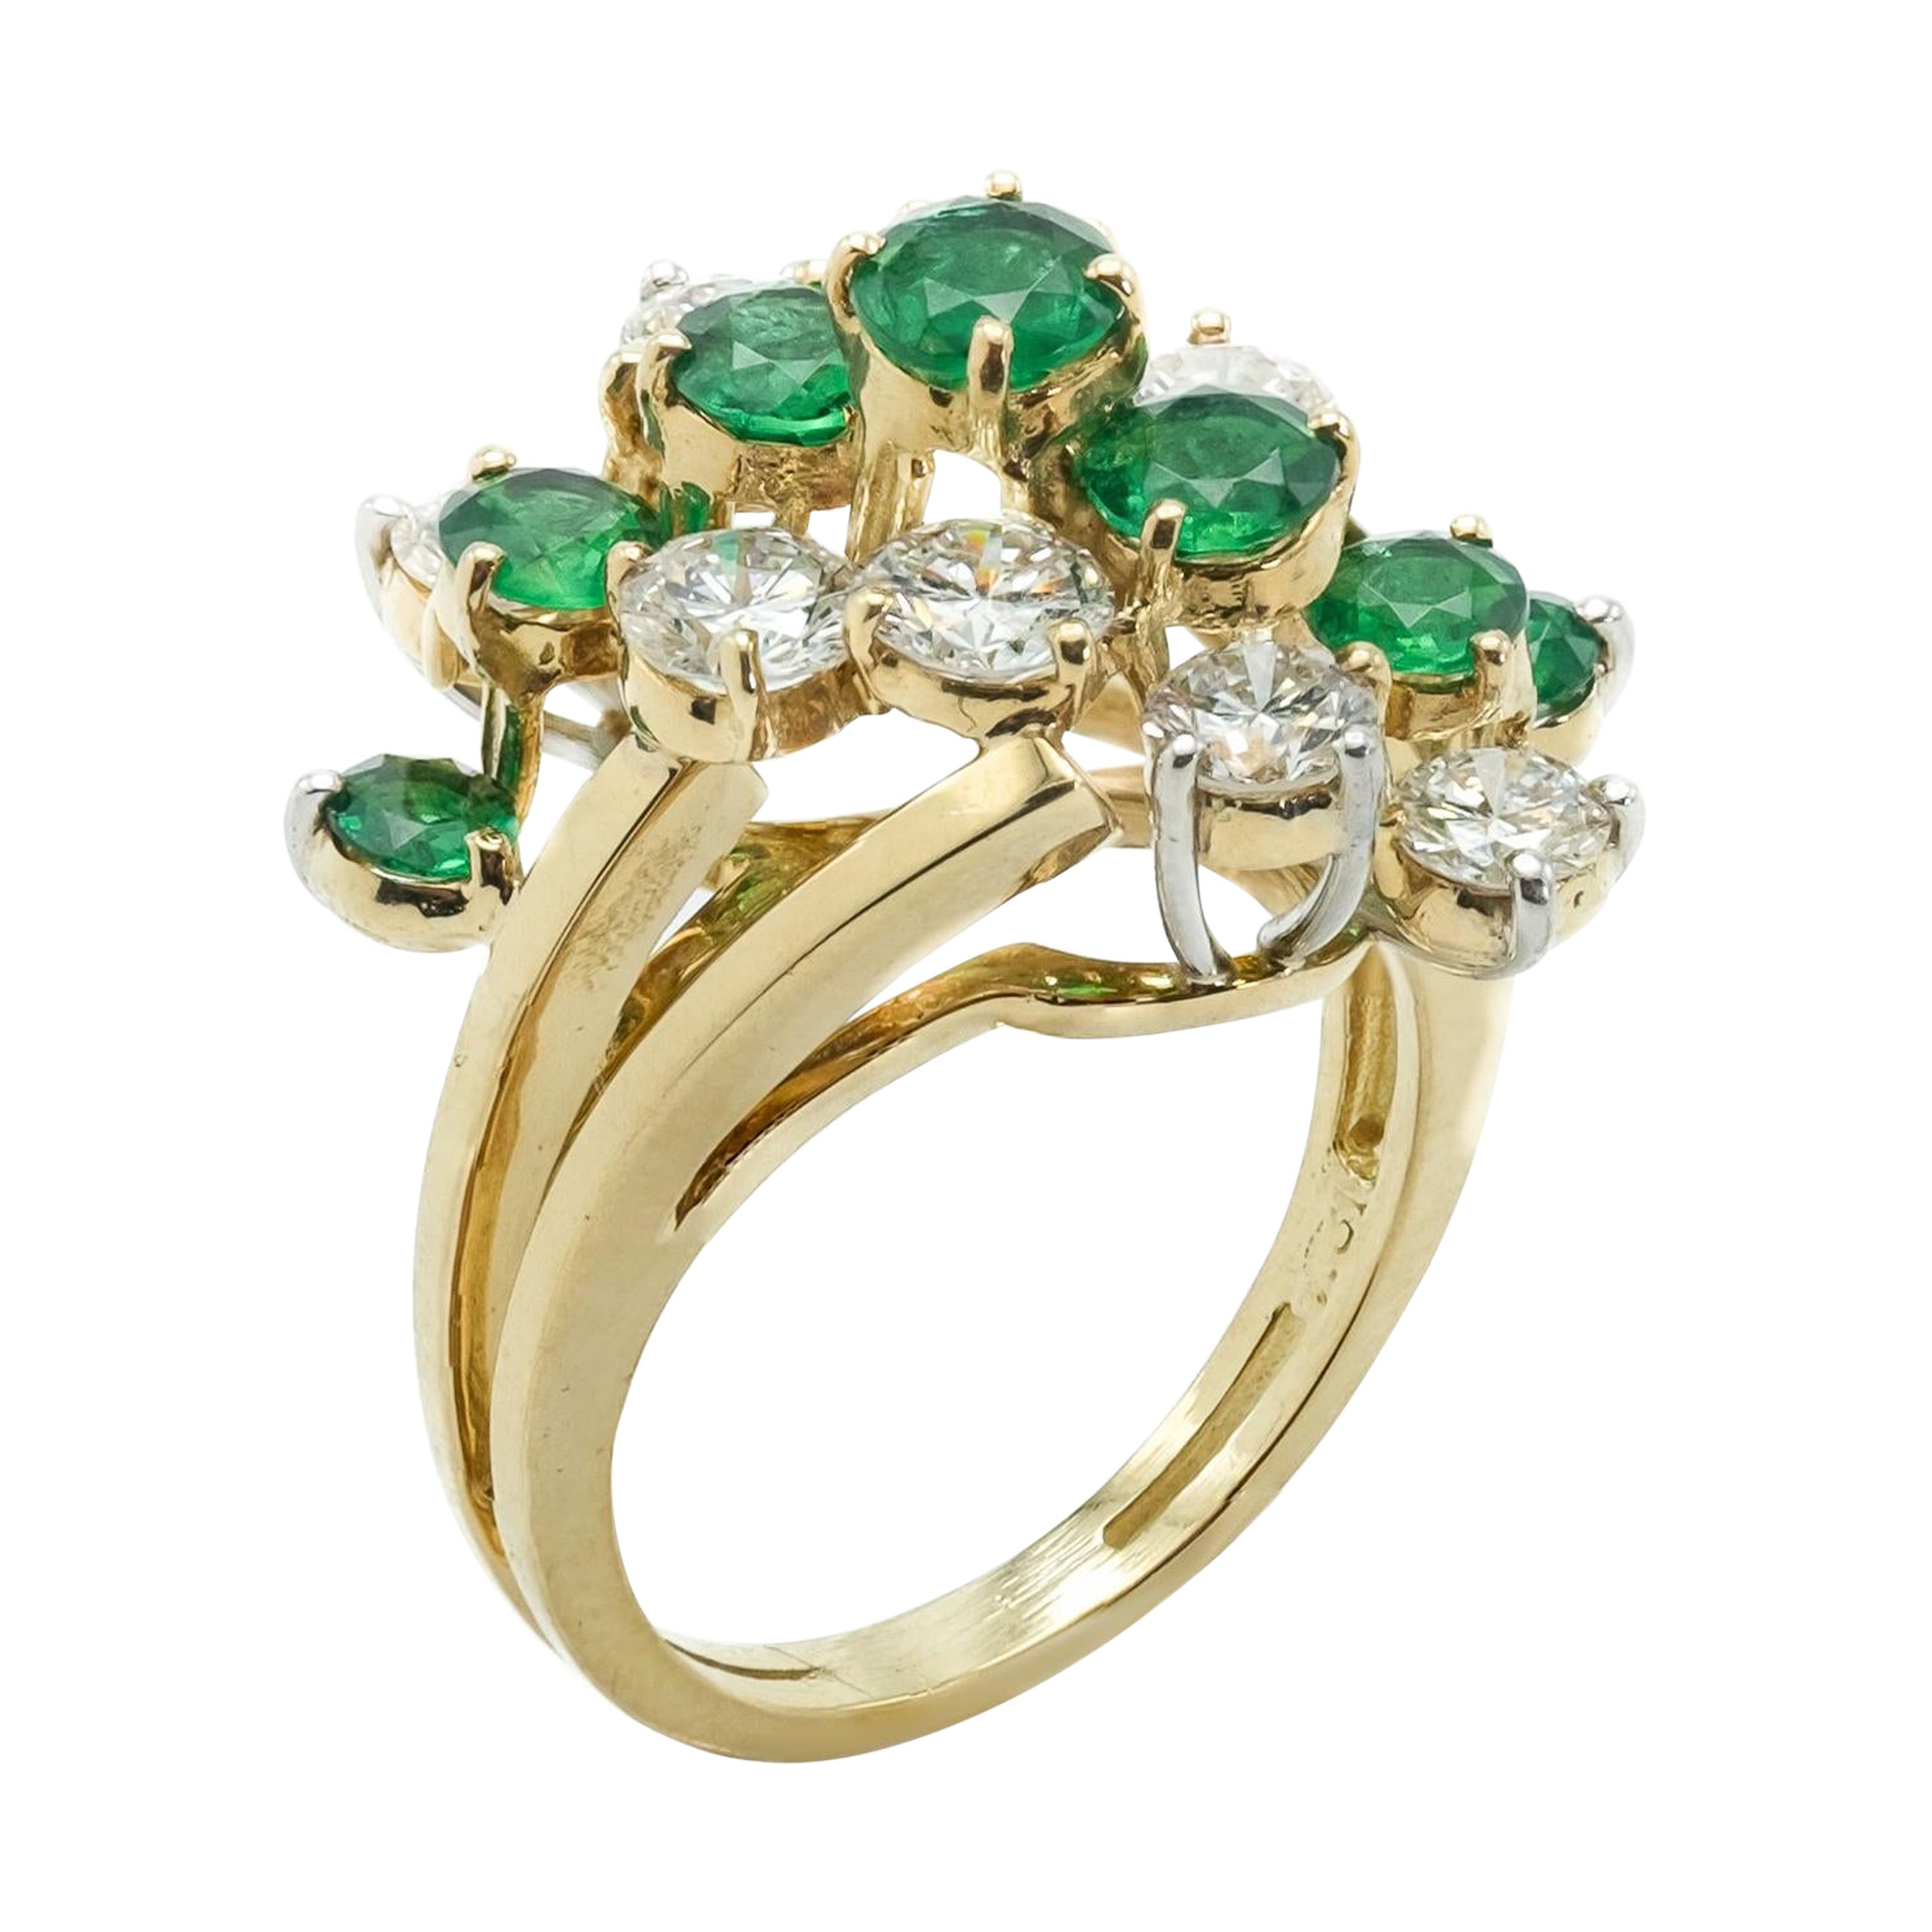 Moderist 18 Karat Kurt Wayne Ring with Emeralds and Diamonds